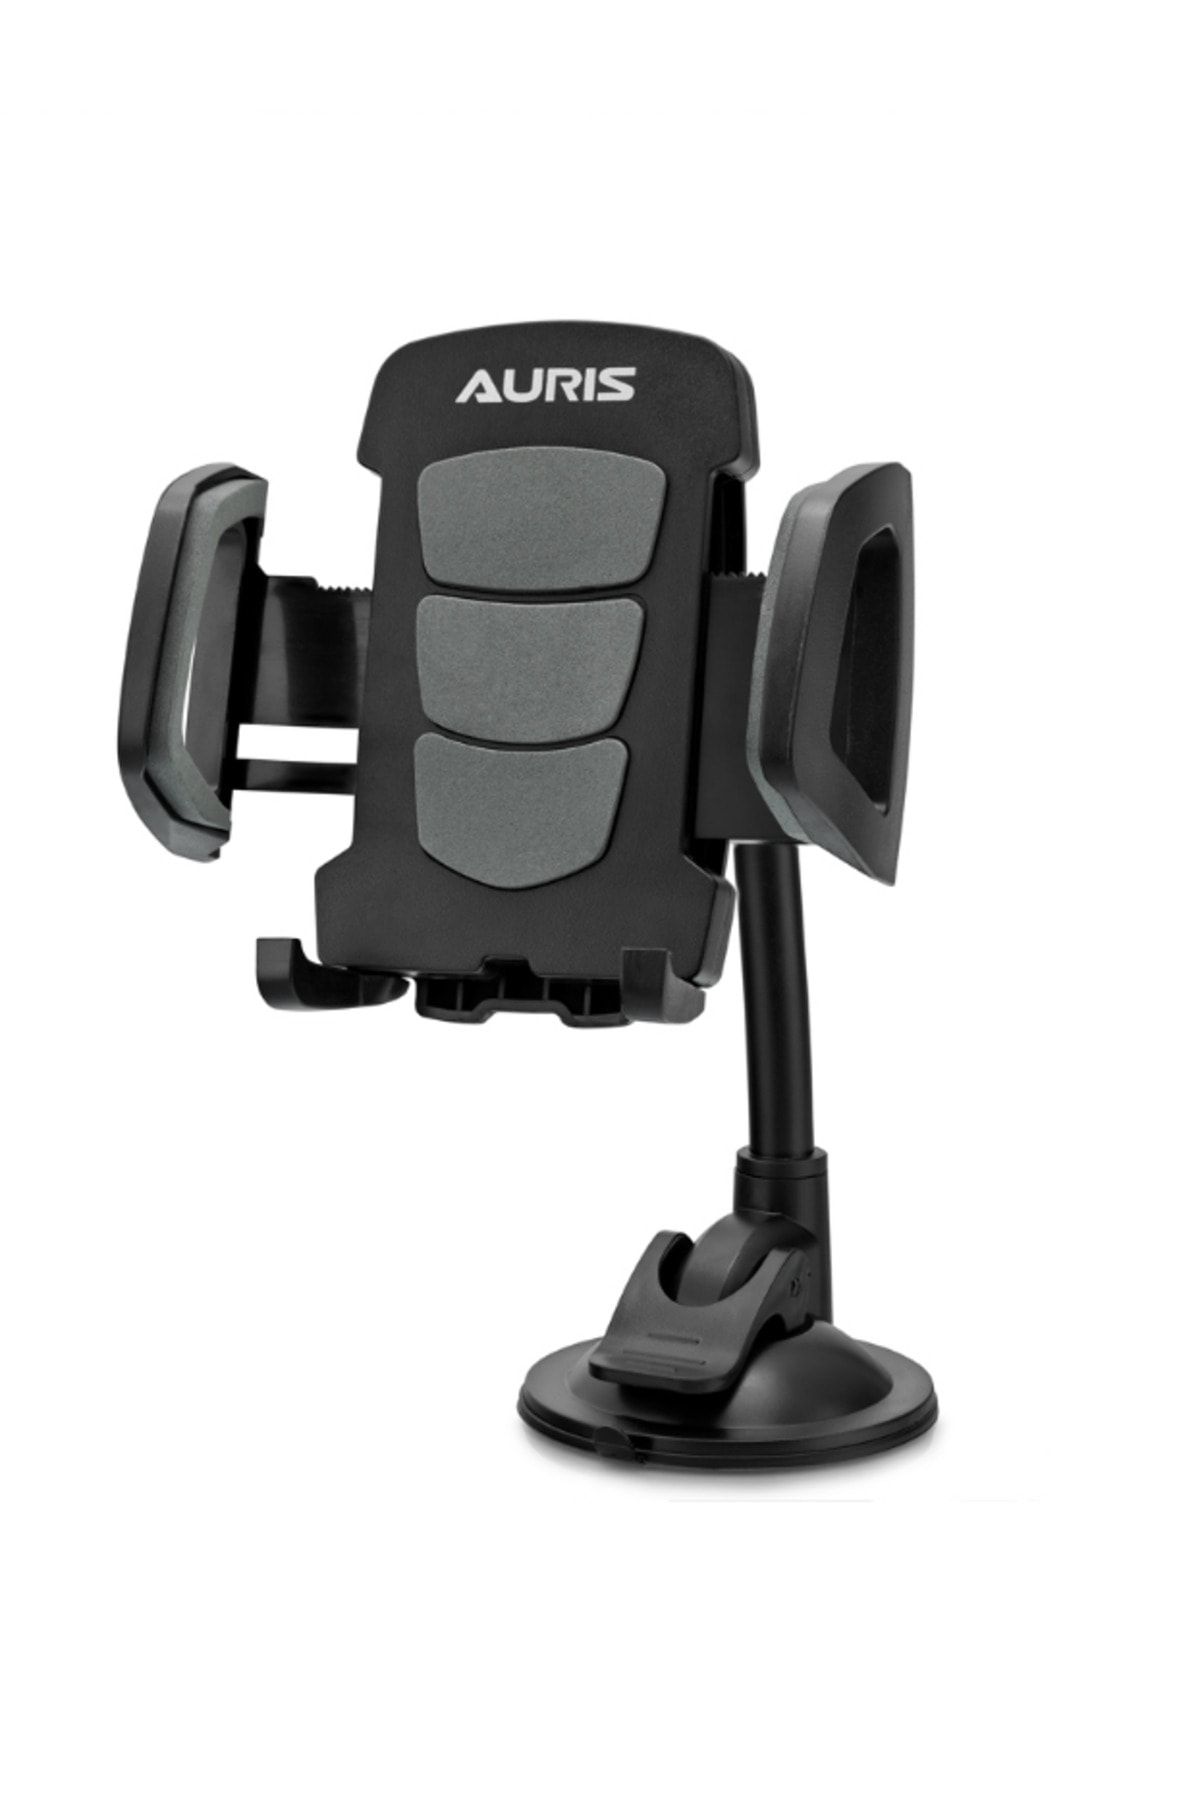 Auris Cama Yapışan Araç Tutucu Telefon Tutucu Vantuzlu Kilit 360° Döner Başlık Araç Içi Oto Tutucu